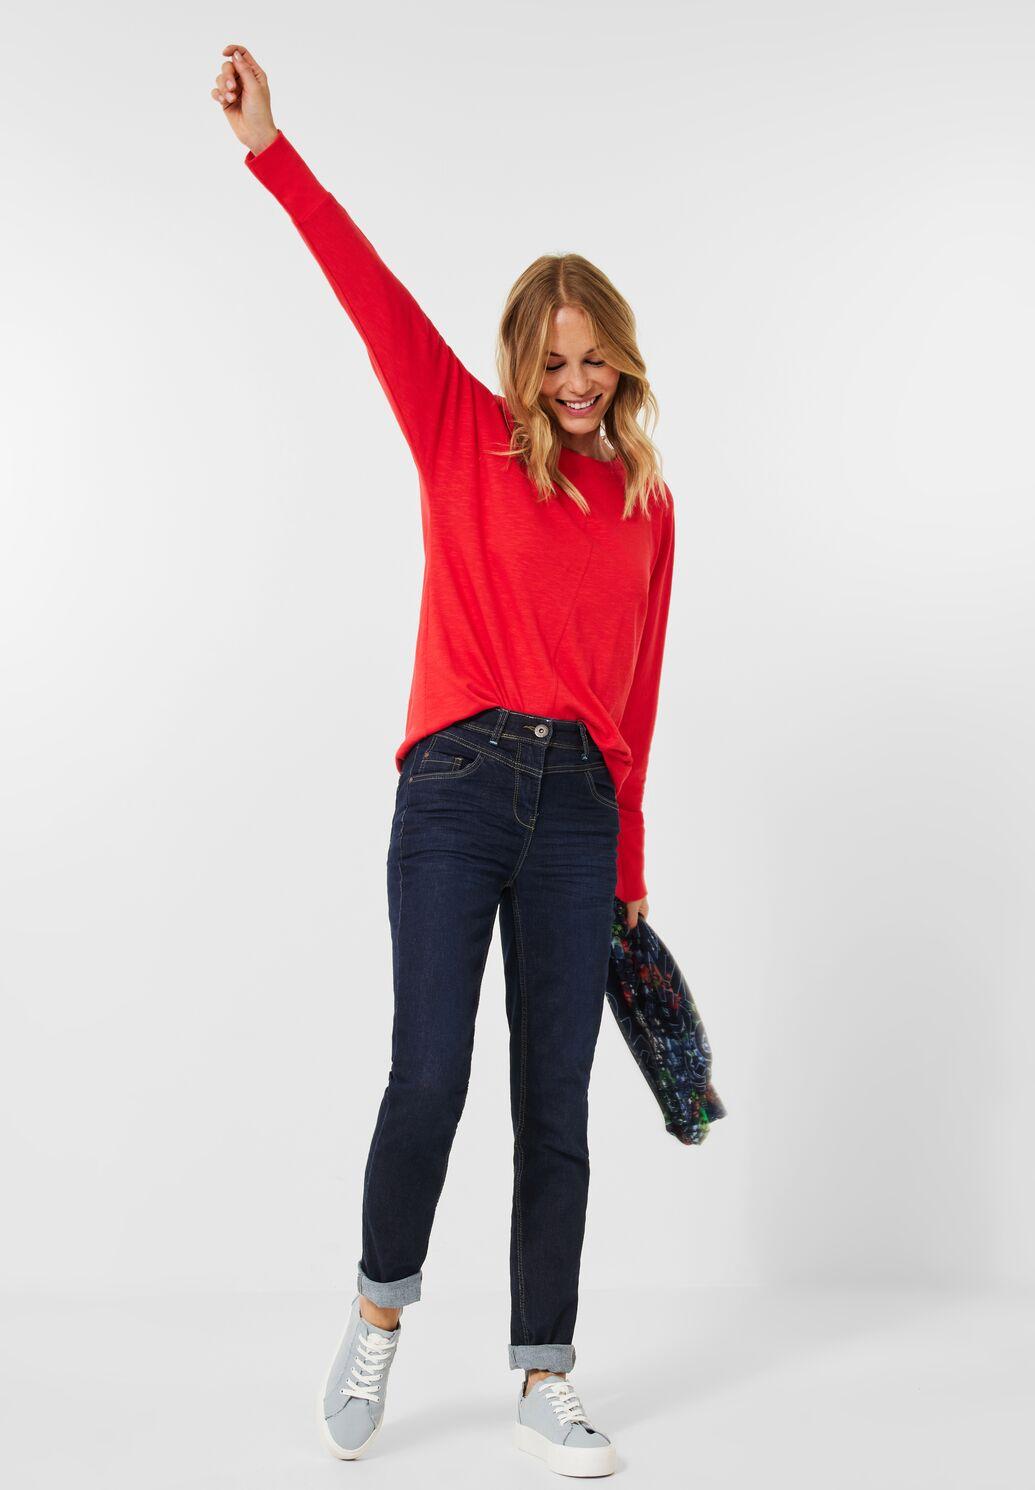 CECIL - Slim Fit Jeans Hose im Style Toronto dunkelblau